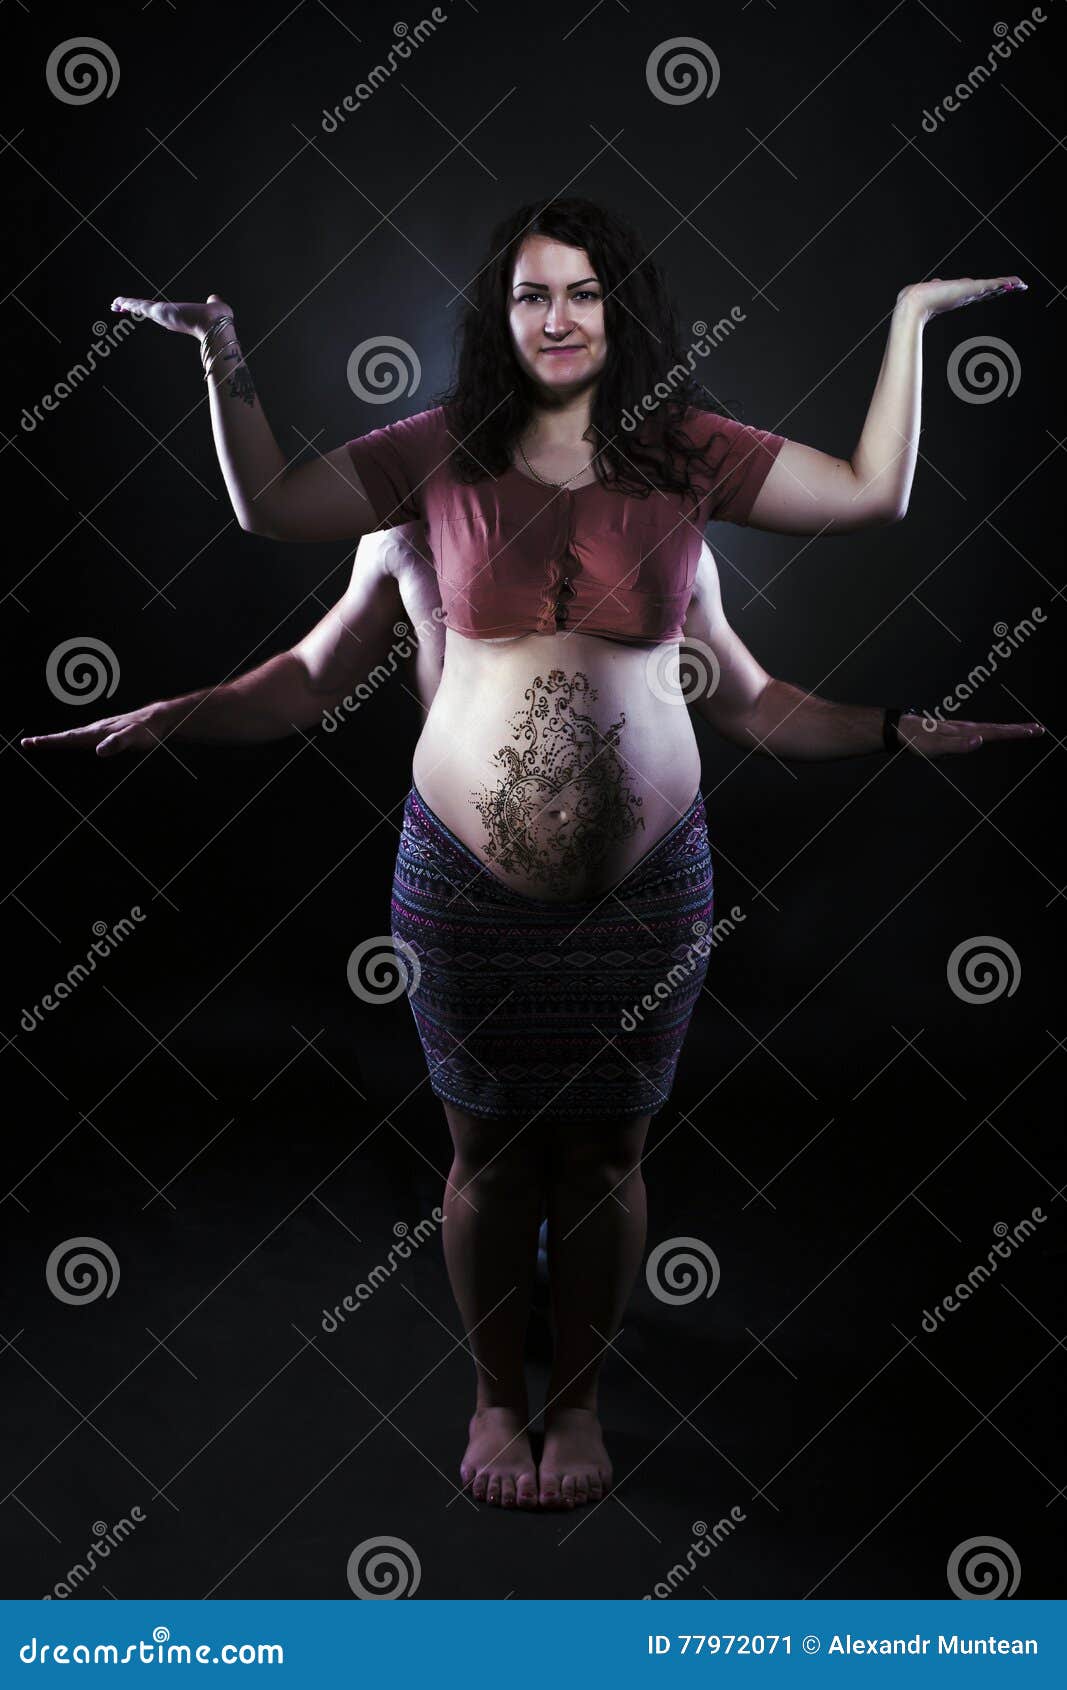 Indian Goddess Maternity Photographs